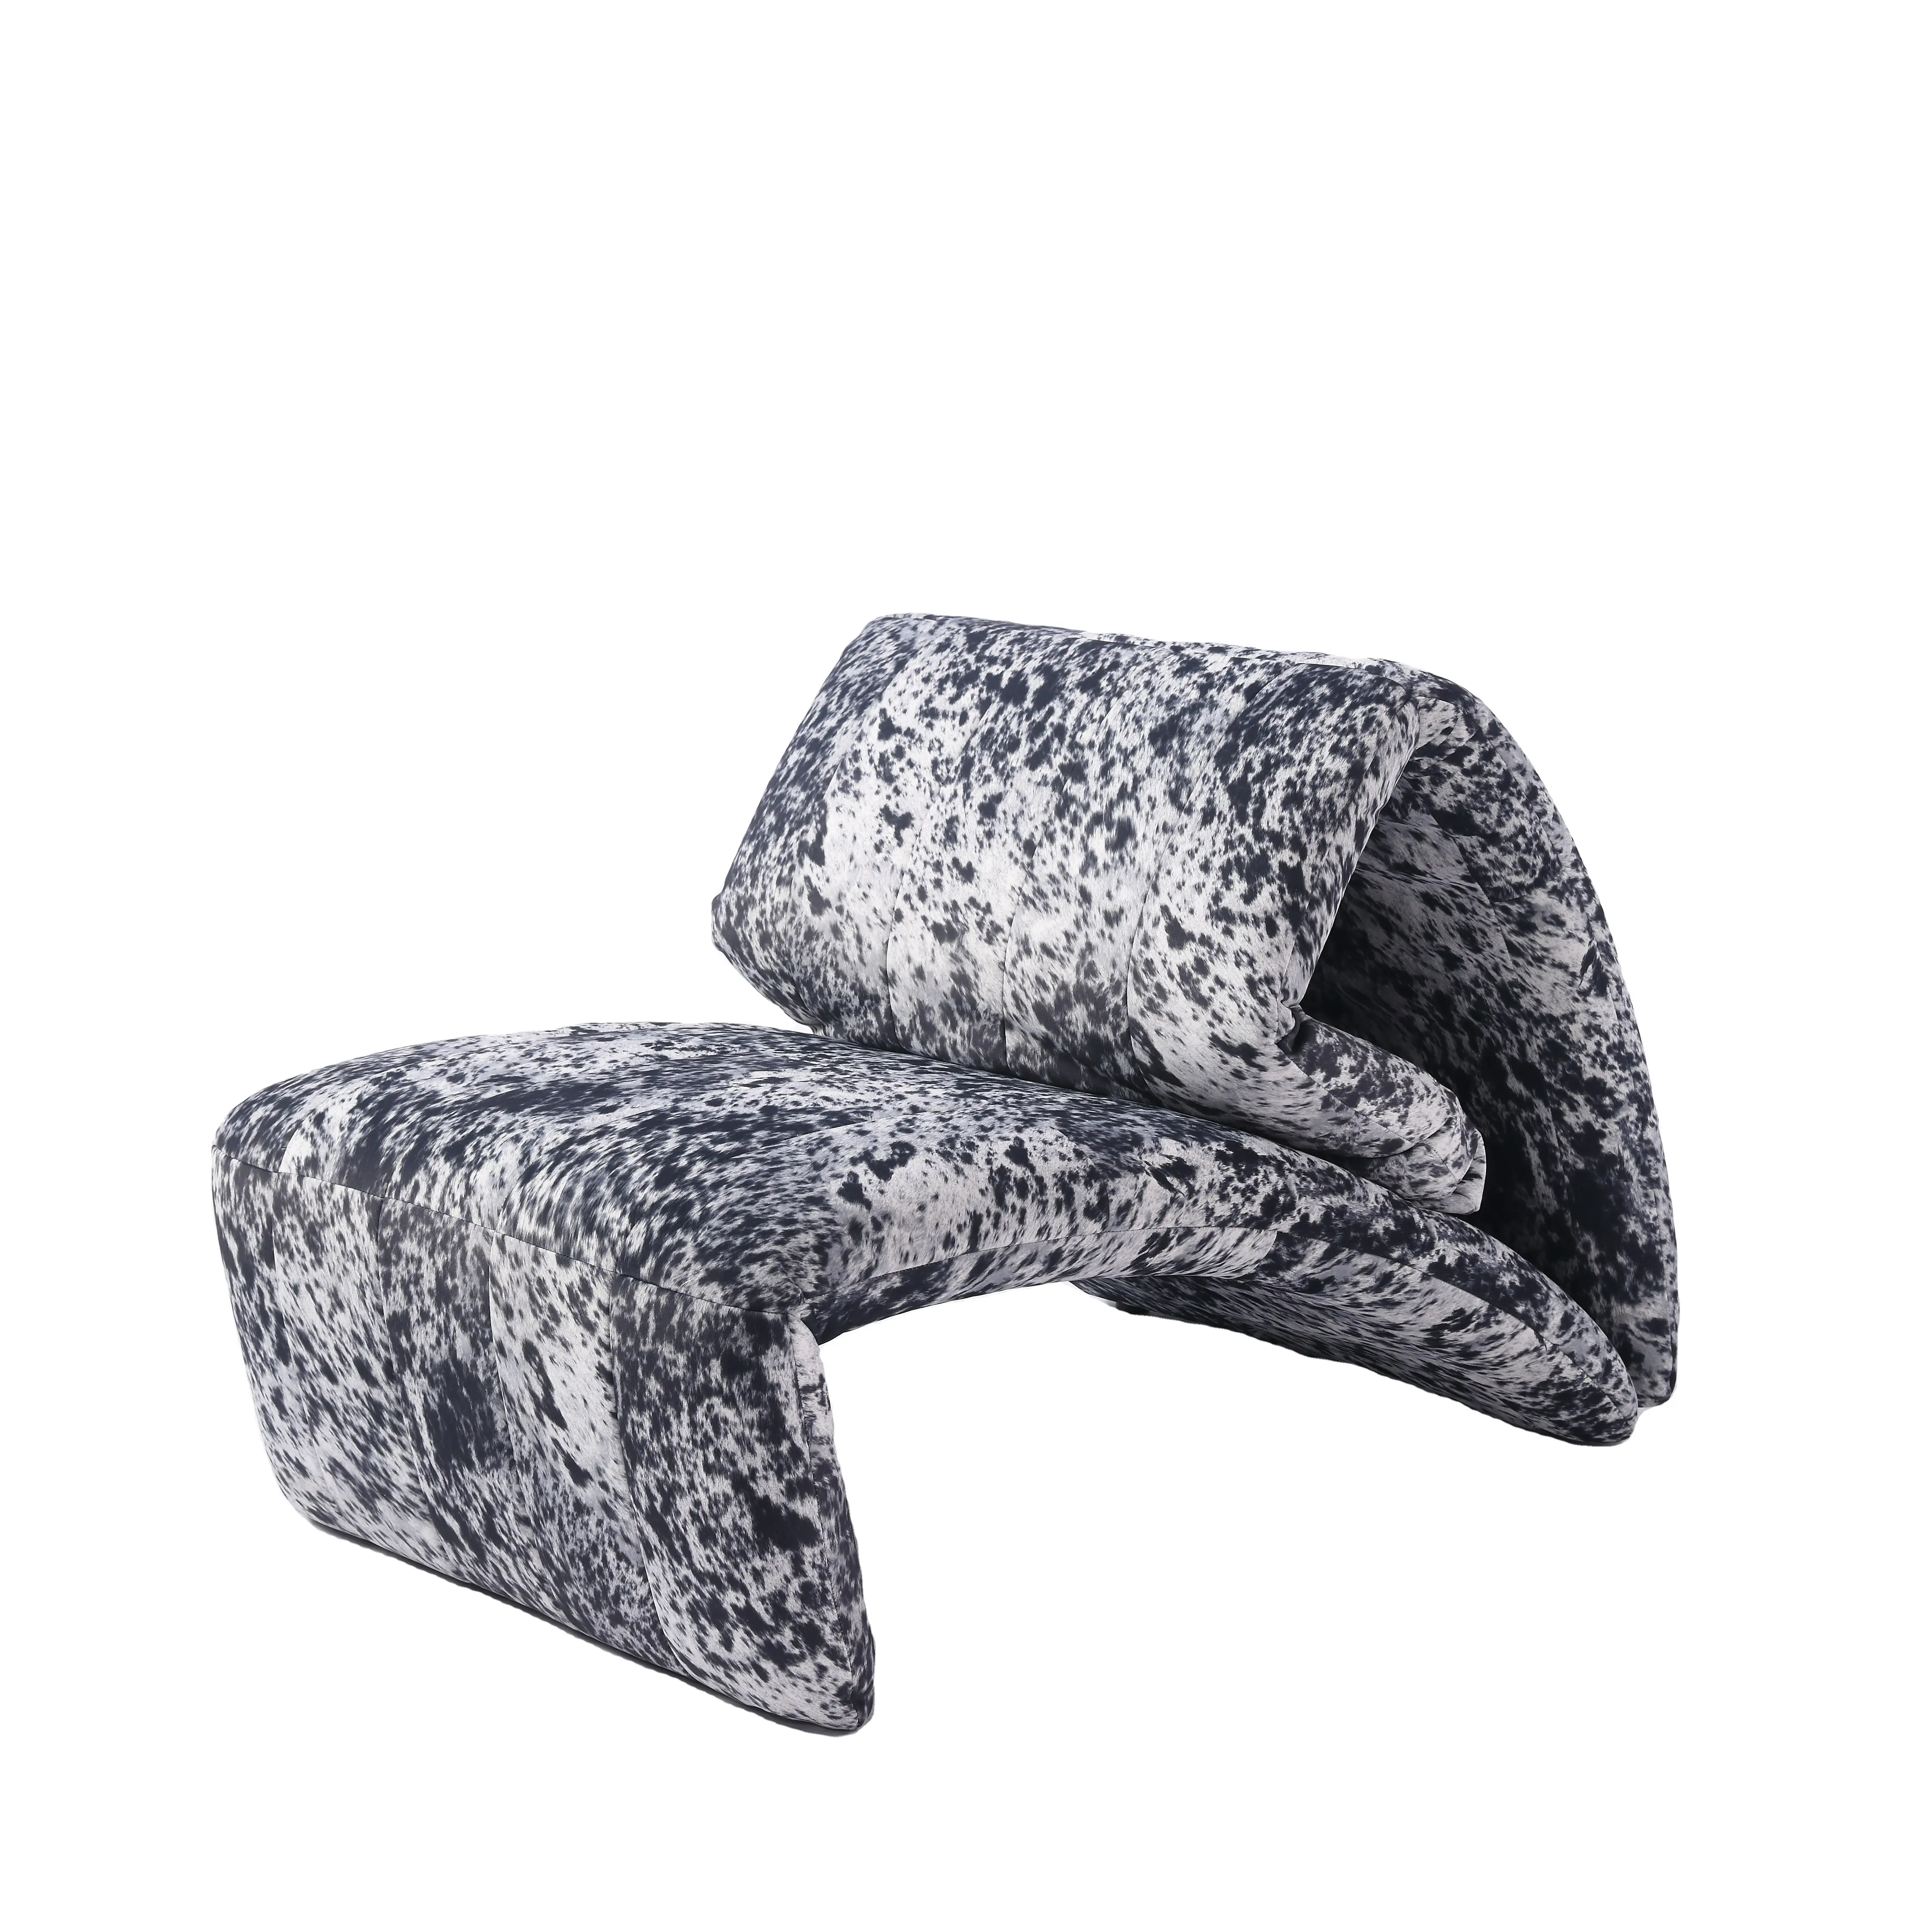 Barcelona Single Sofa Chair Creative Multi-Functional Recliner Fist Folding Modern Stylish Living Room Bedroom Outdoor Use